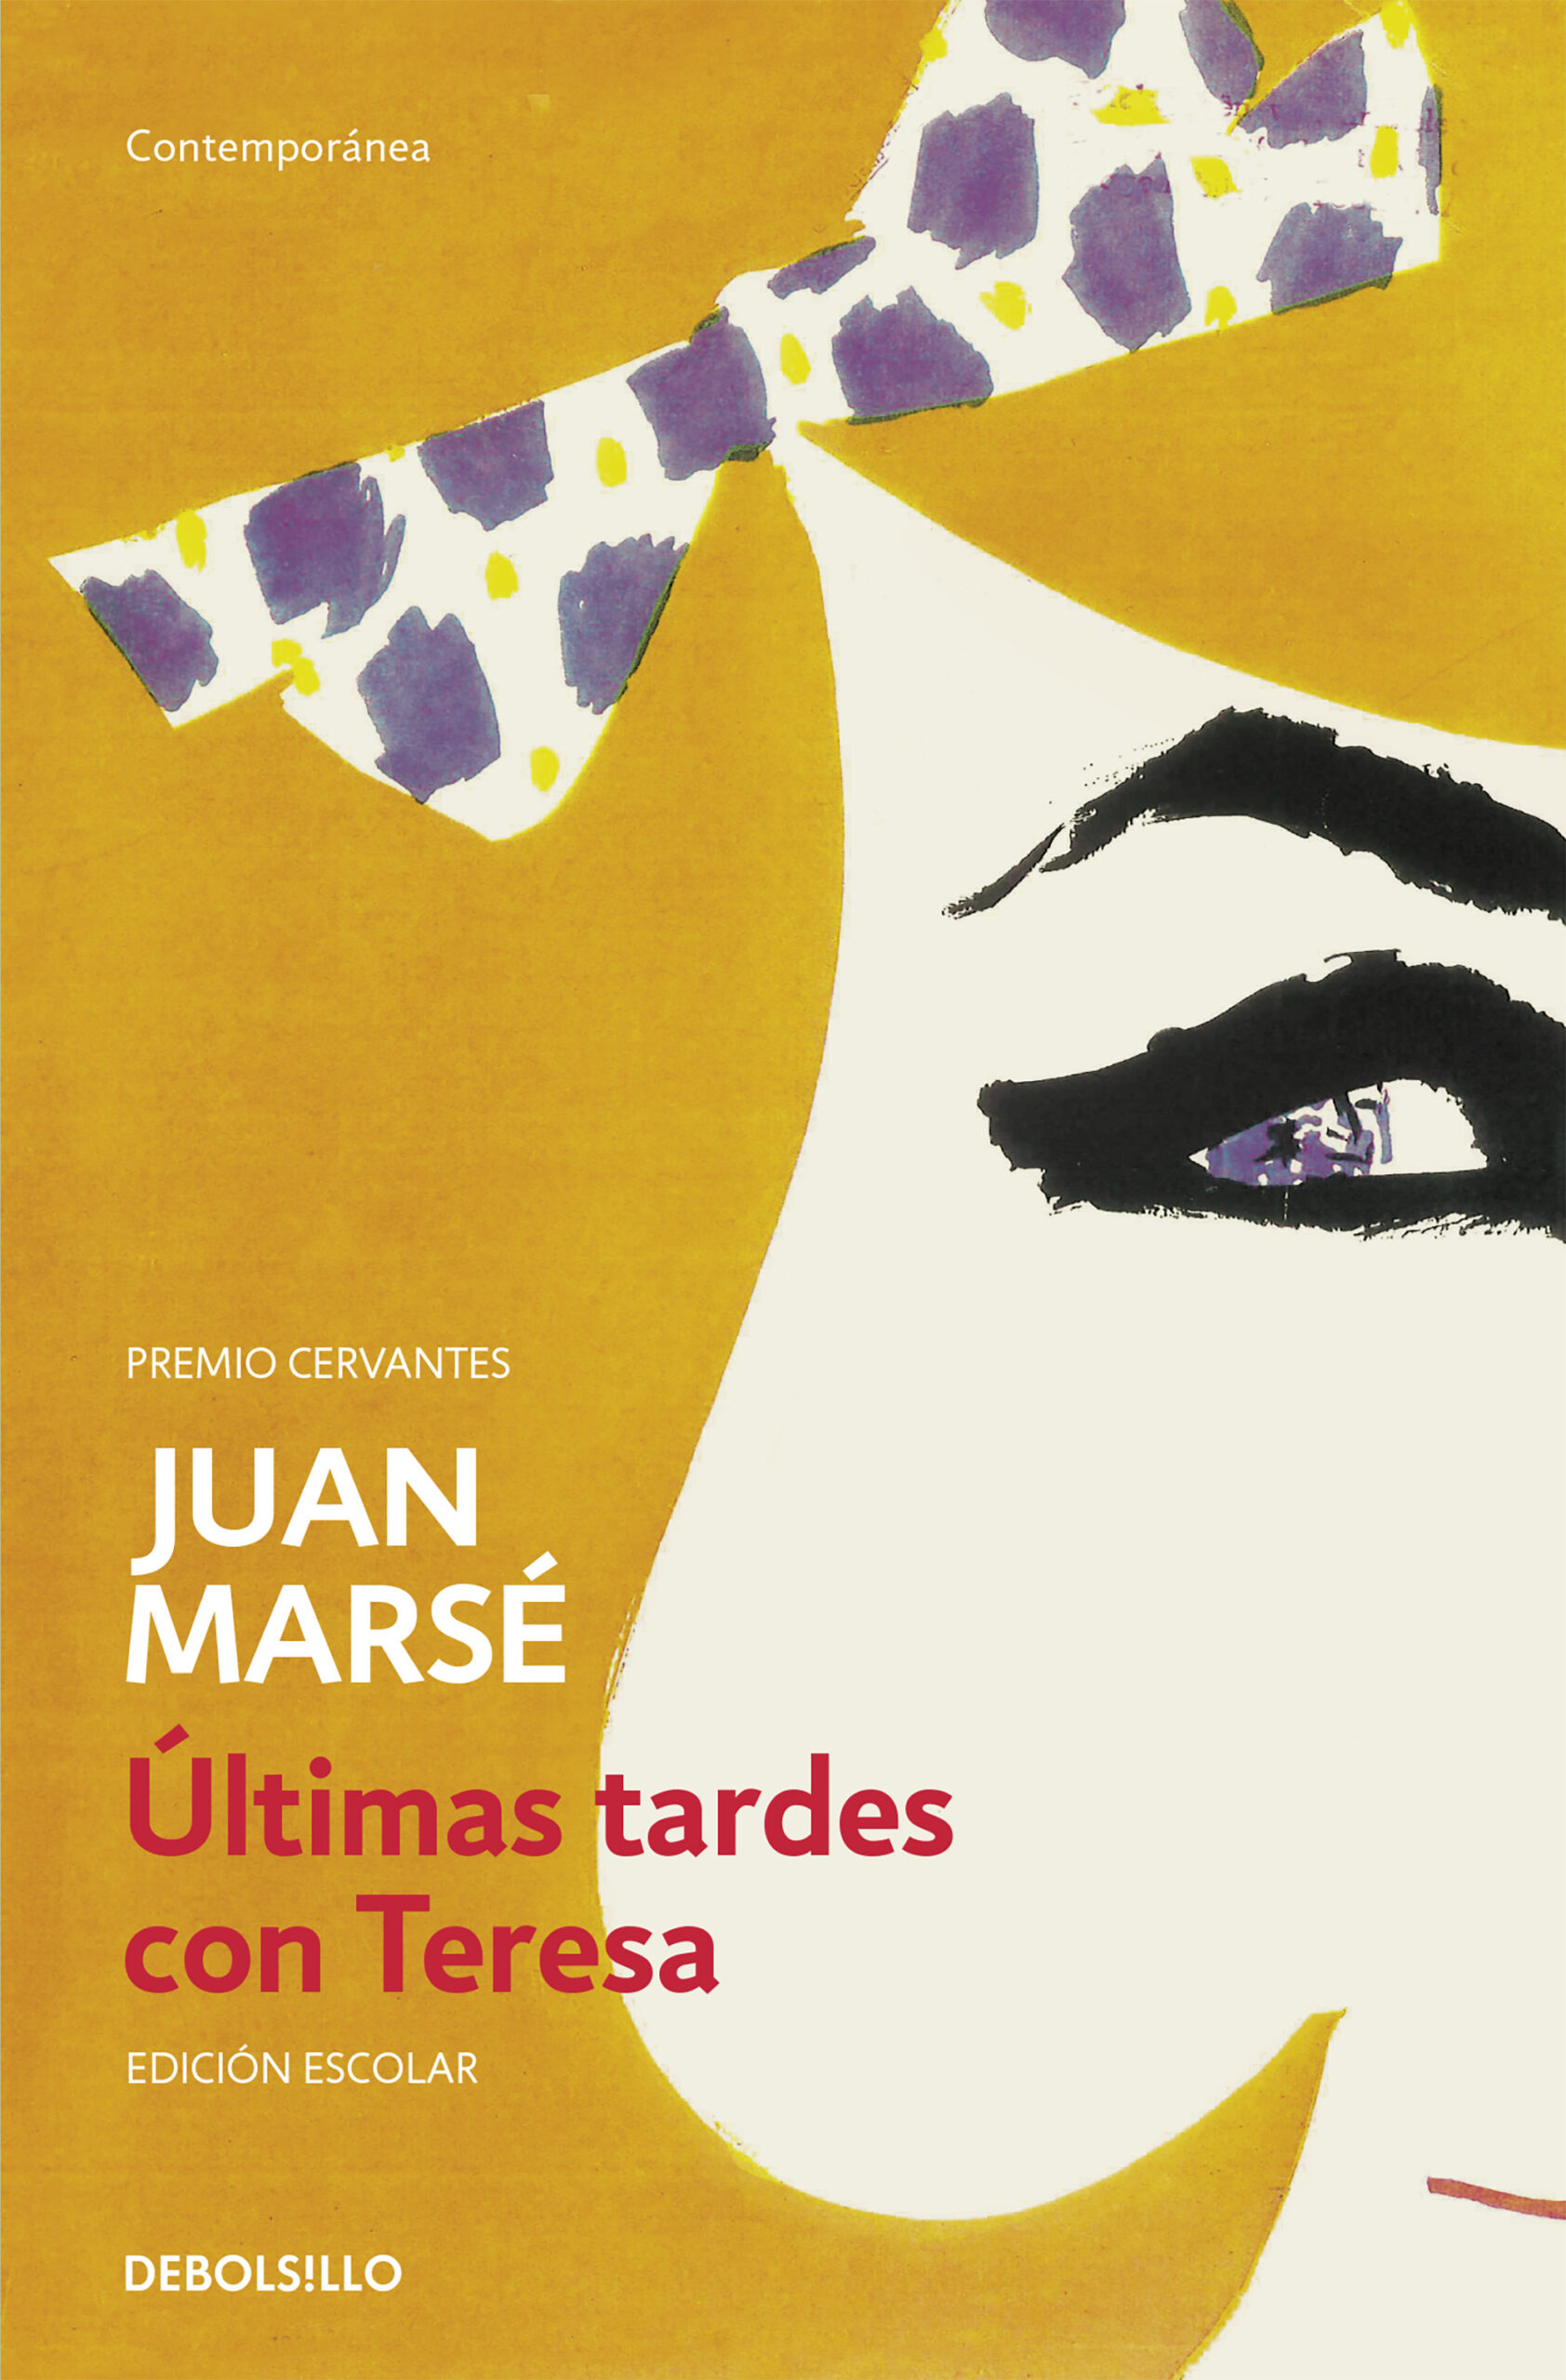 Juan Marsé "Viimased õhtud Teresaga" „Últimas tardes con Teresa“